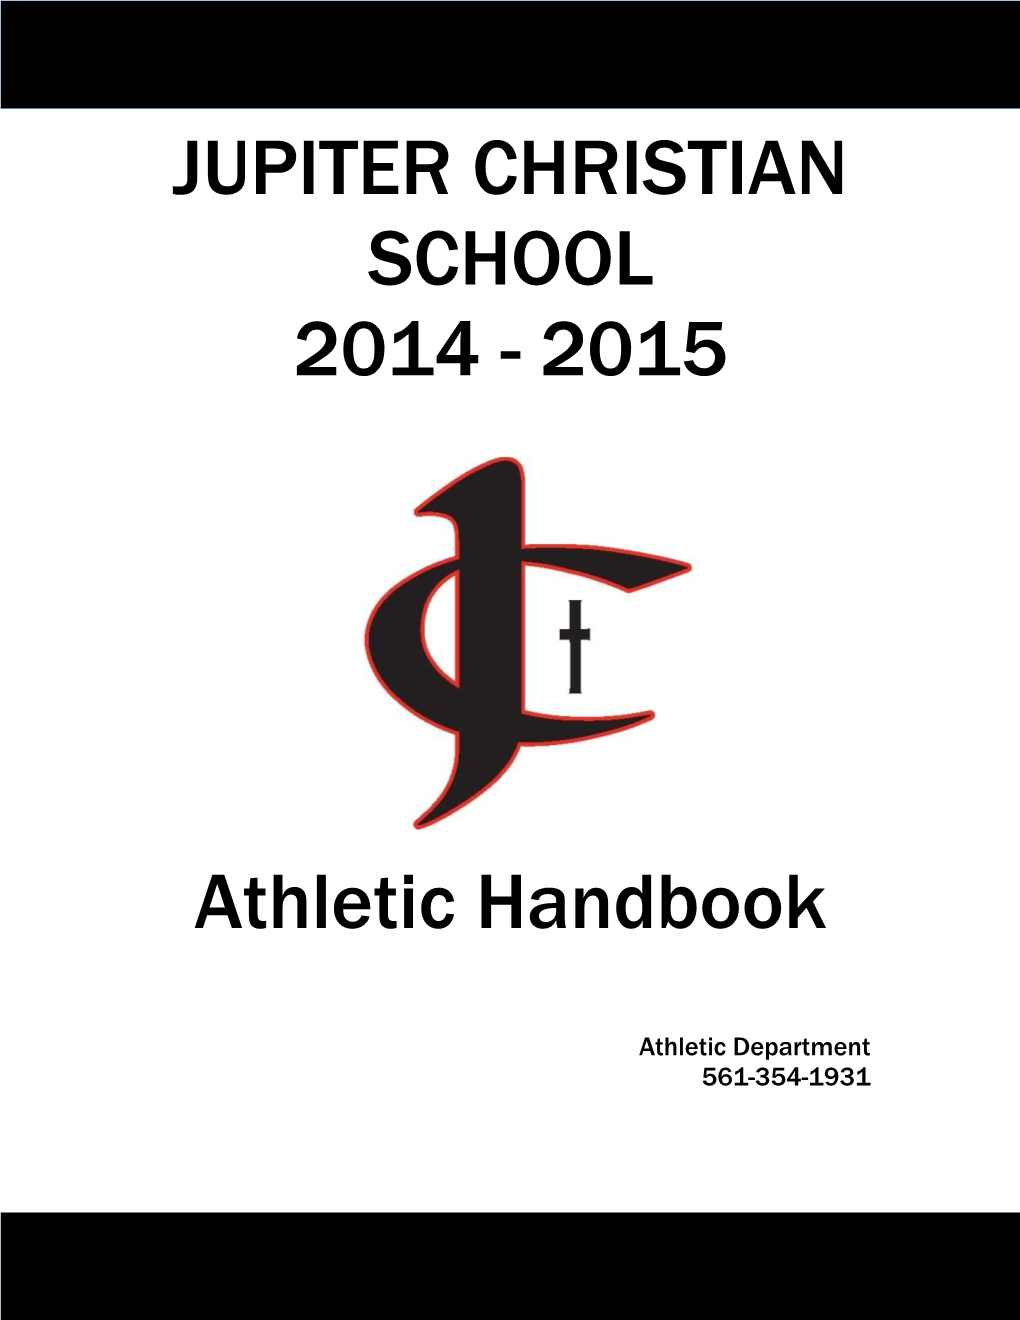 The Jupiter Christian School Athletic Department